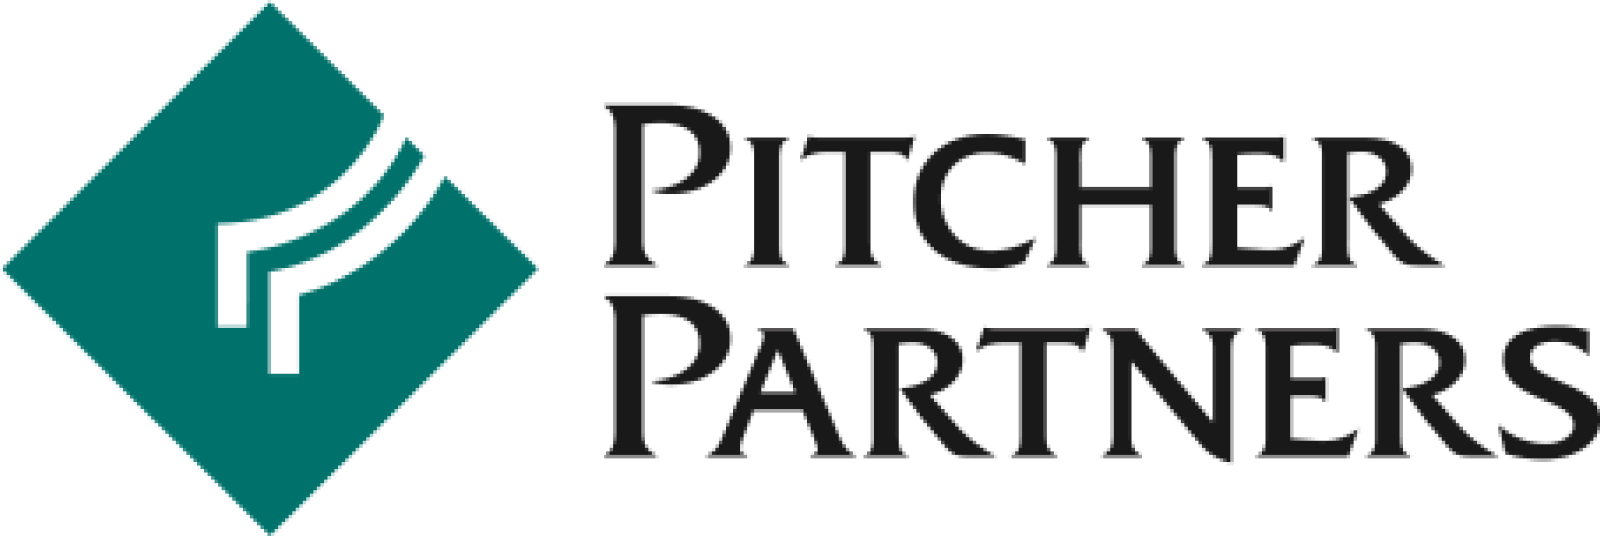 logo - Pitcher Partners 